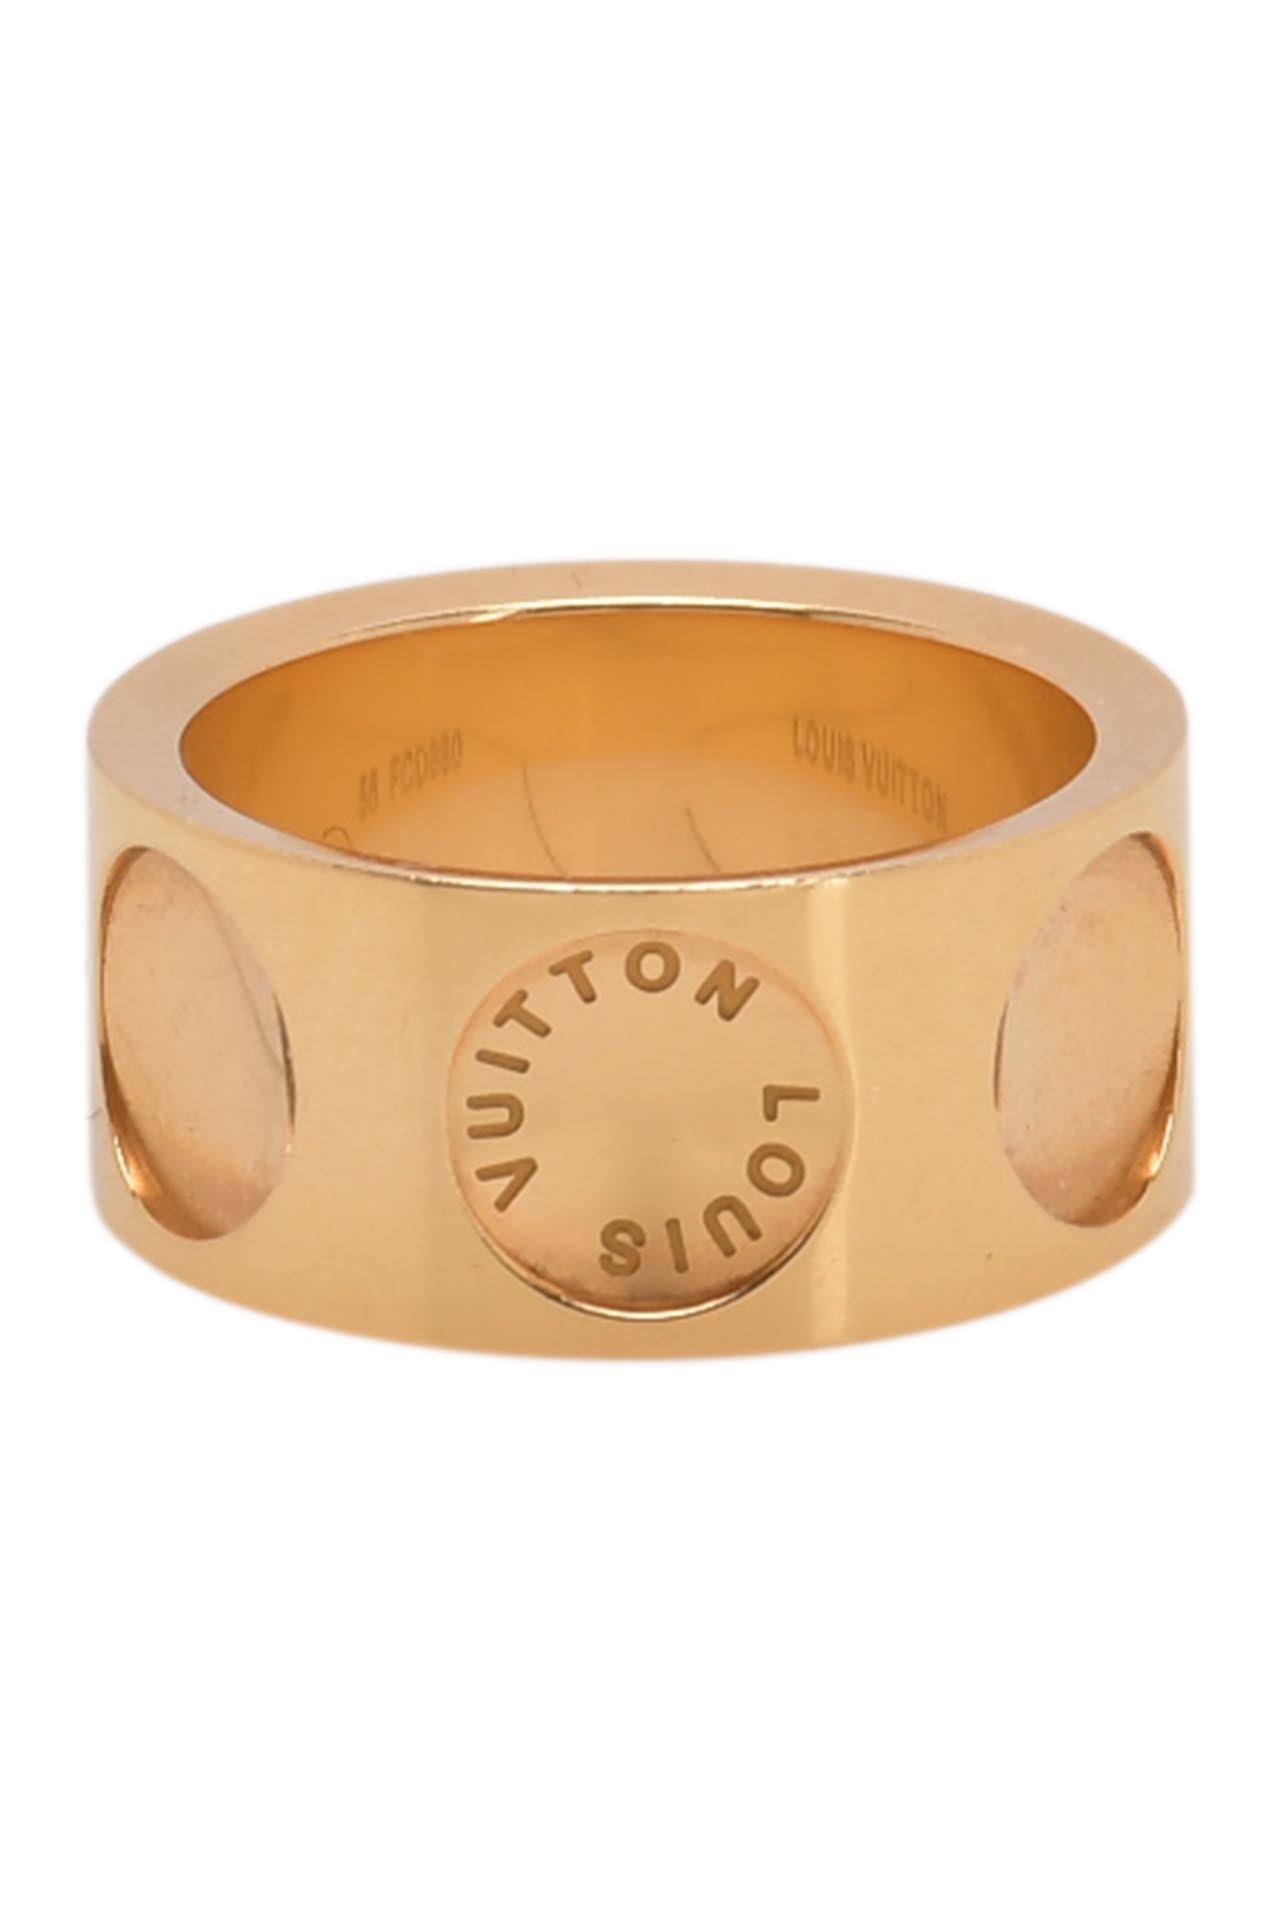 Louis Vuitton Empreinte Wedding Band in 18K Rose Gold. Size 55, Width 3mm